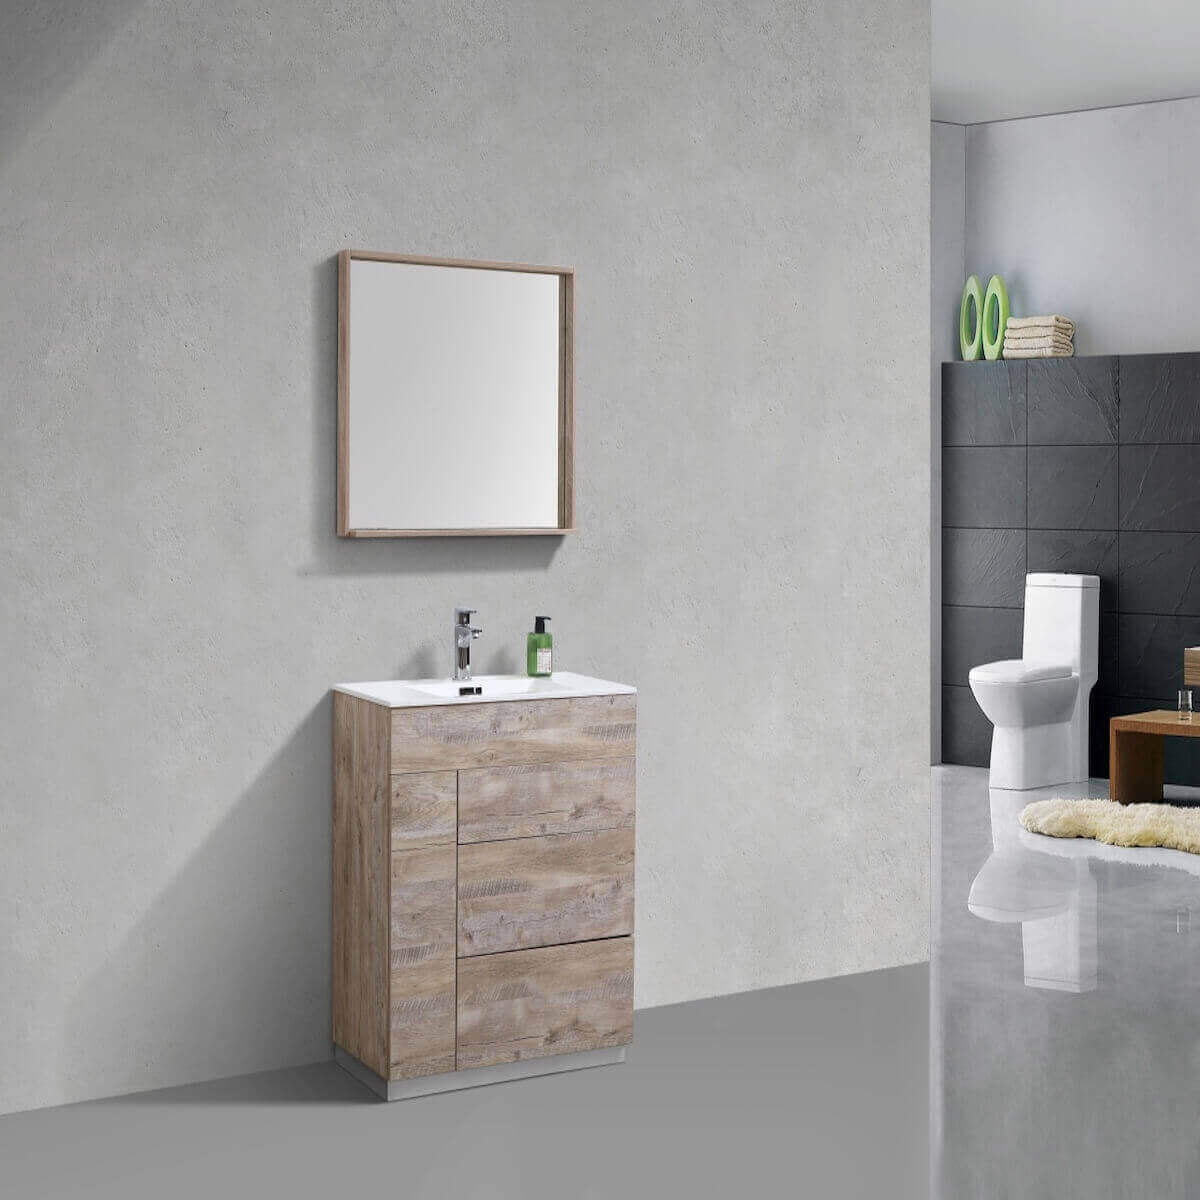 KubeBath Milano 36" Nature Wood Floor Mount Single Vanity KFM36-NW in Bathroom #finish_nature wood